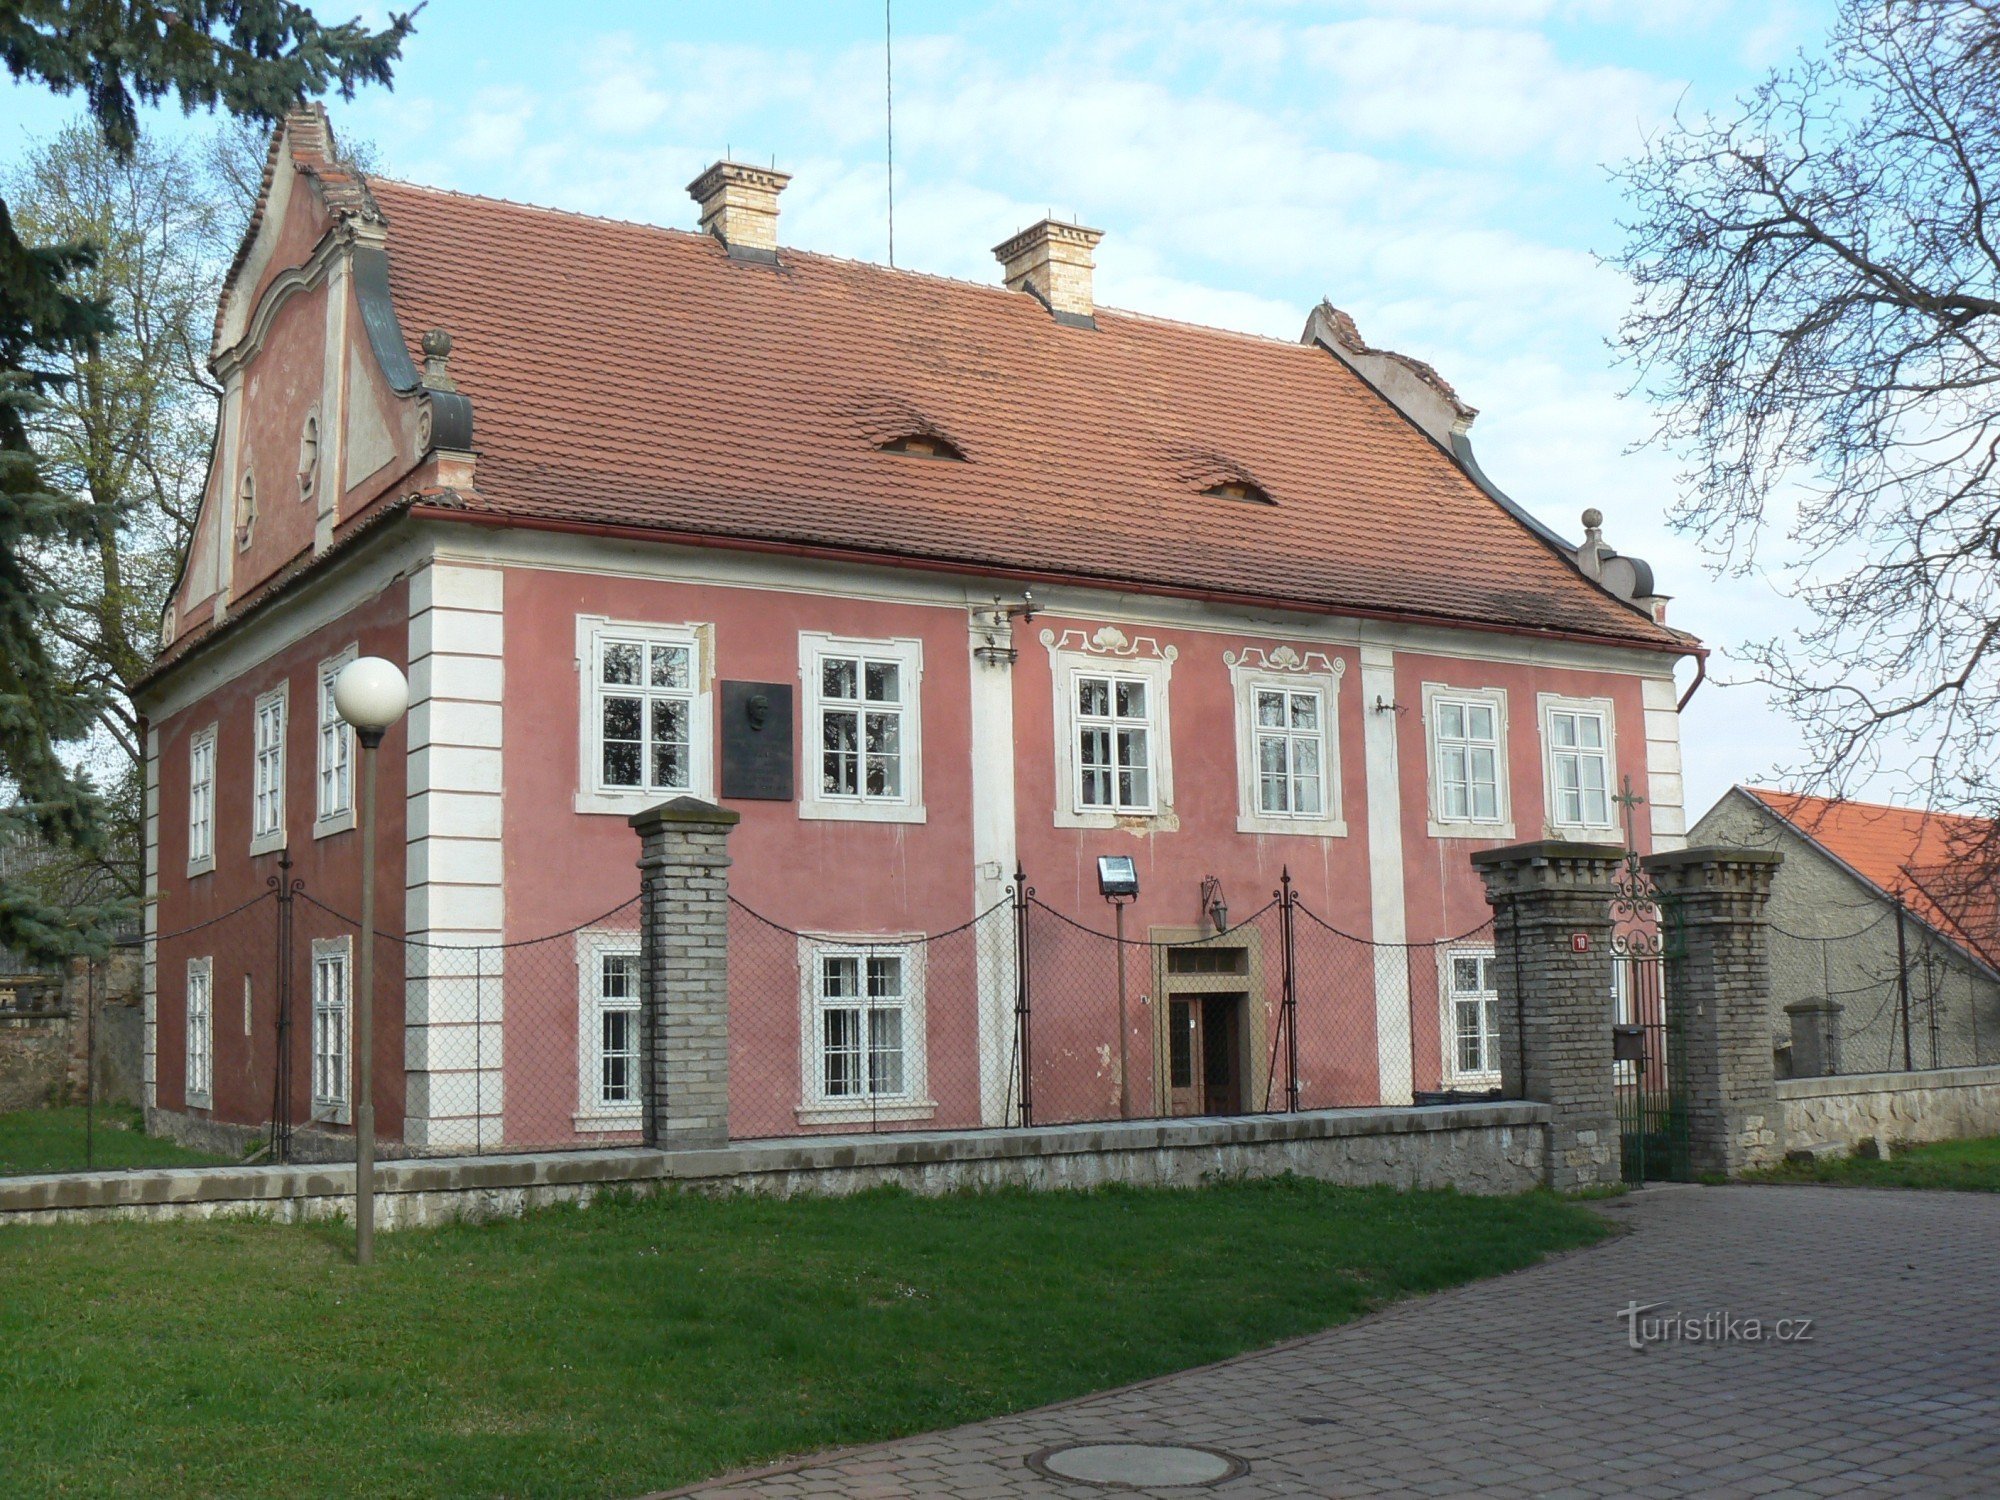 Orech, σπίτι αρ. 10 πίσω από την εκκλησία, τόπος εργασίας του J.Š. Baar